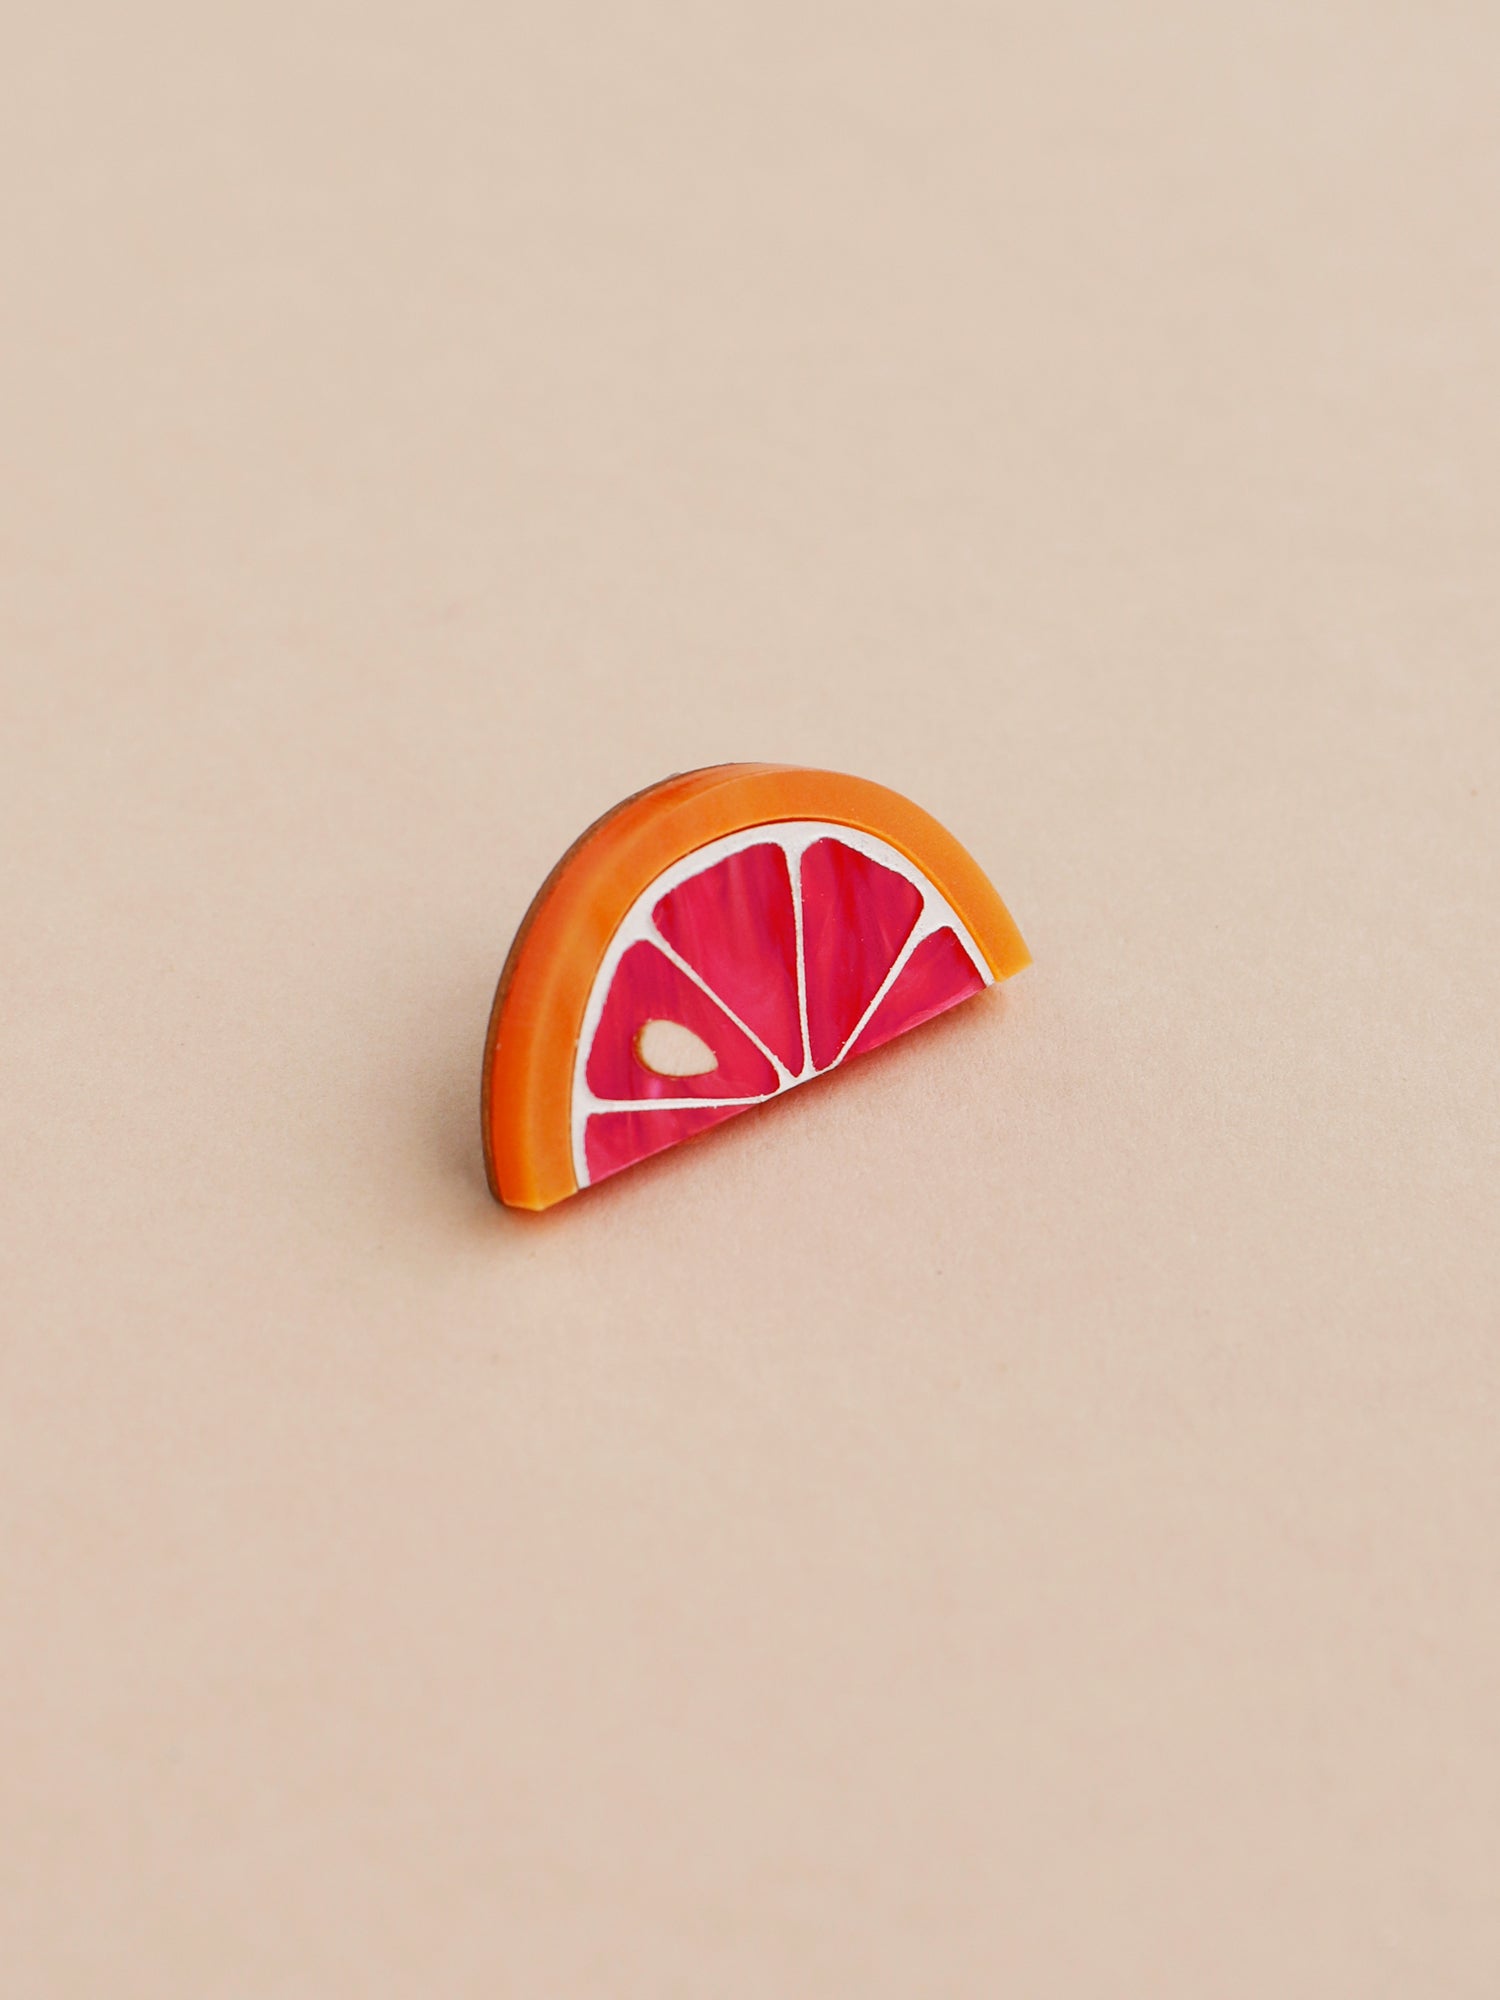 Grapefruit Slice Pin